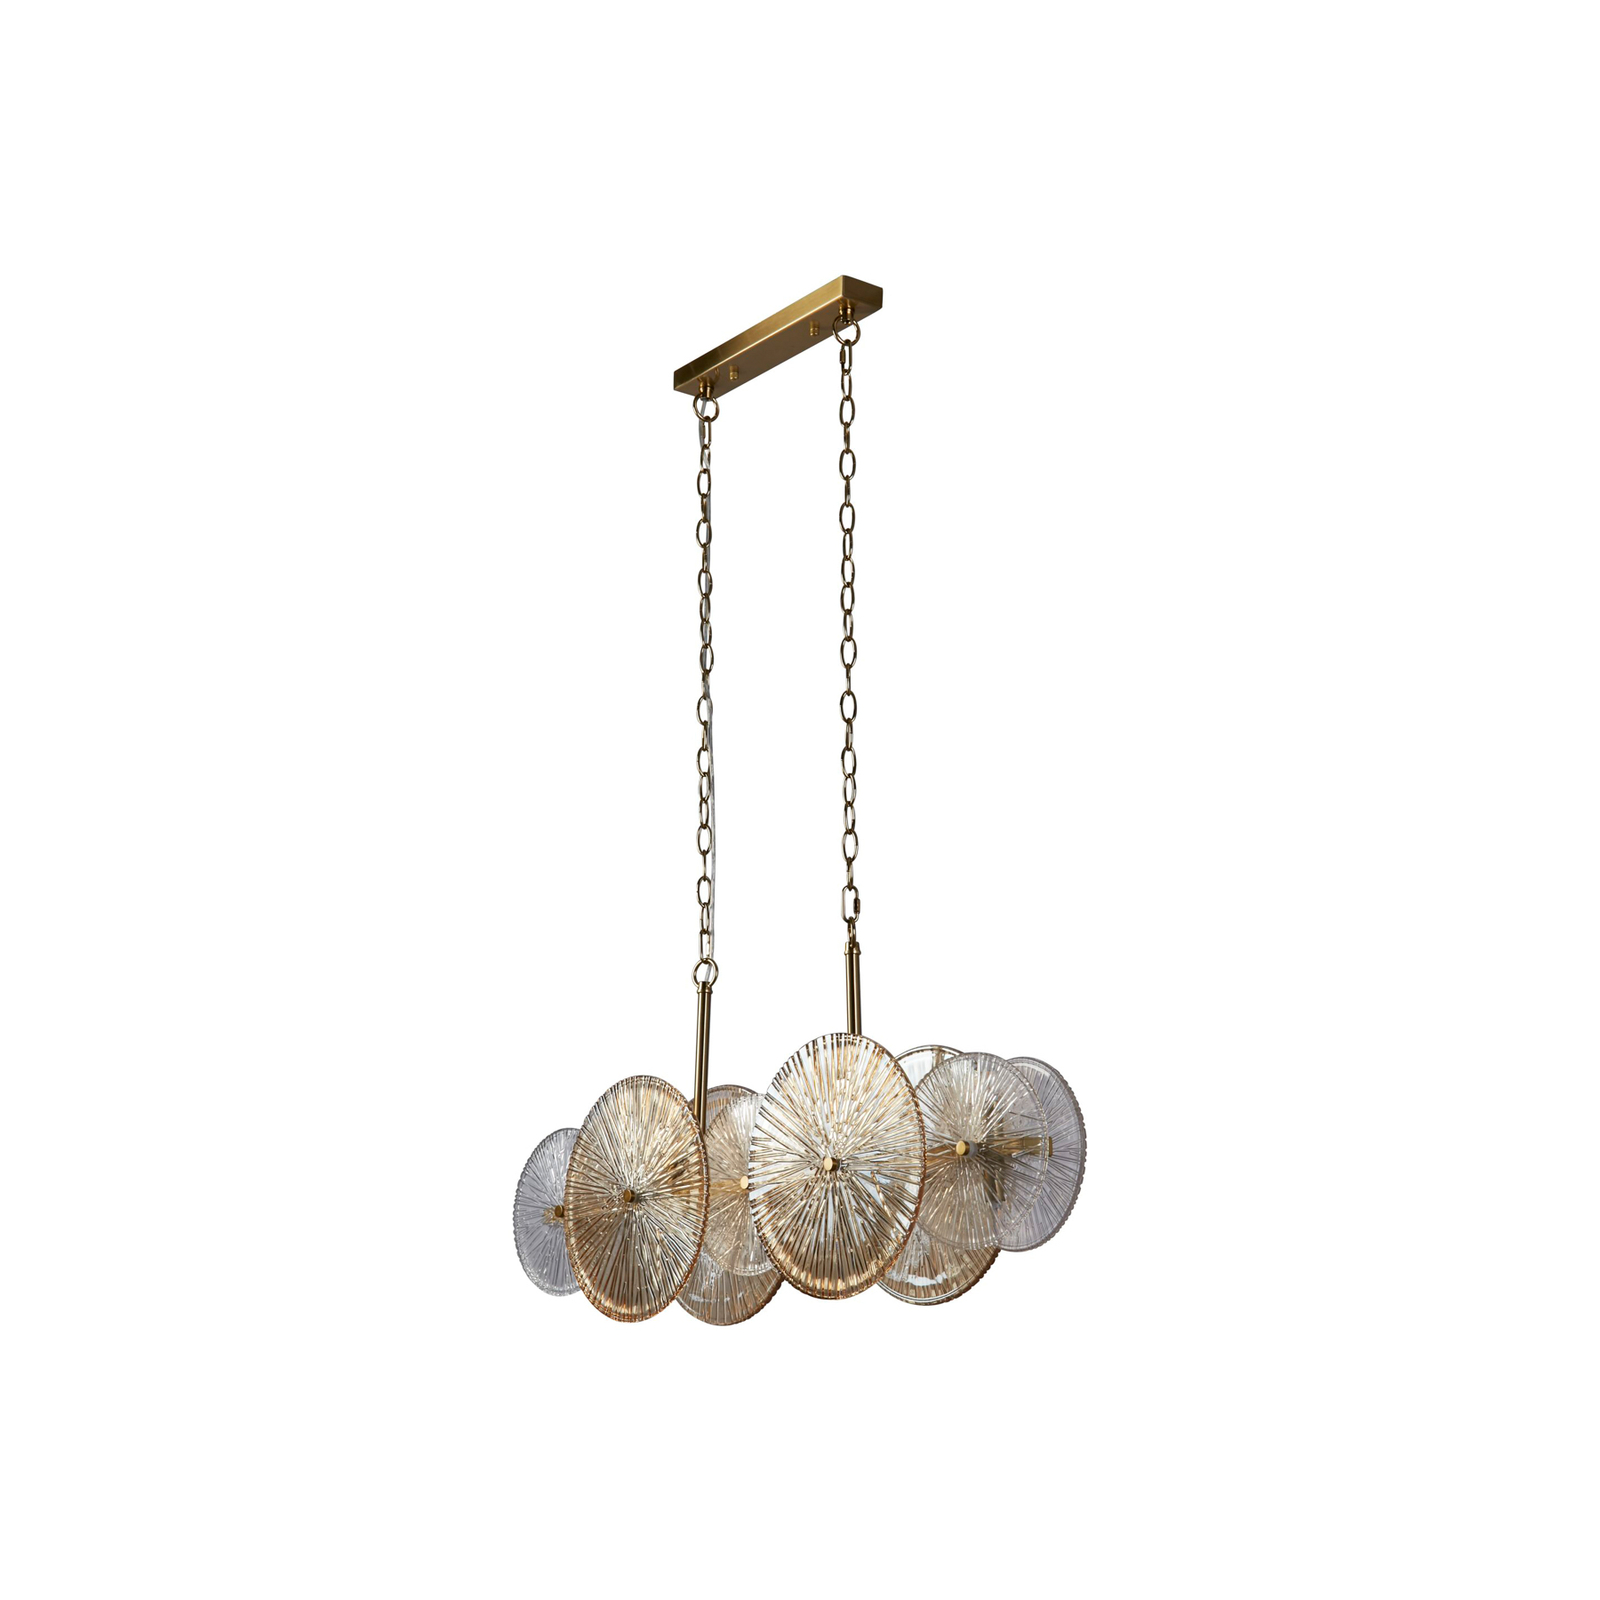 Wagenwiel hanglamp, 10-lamps